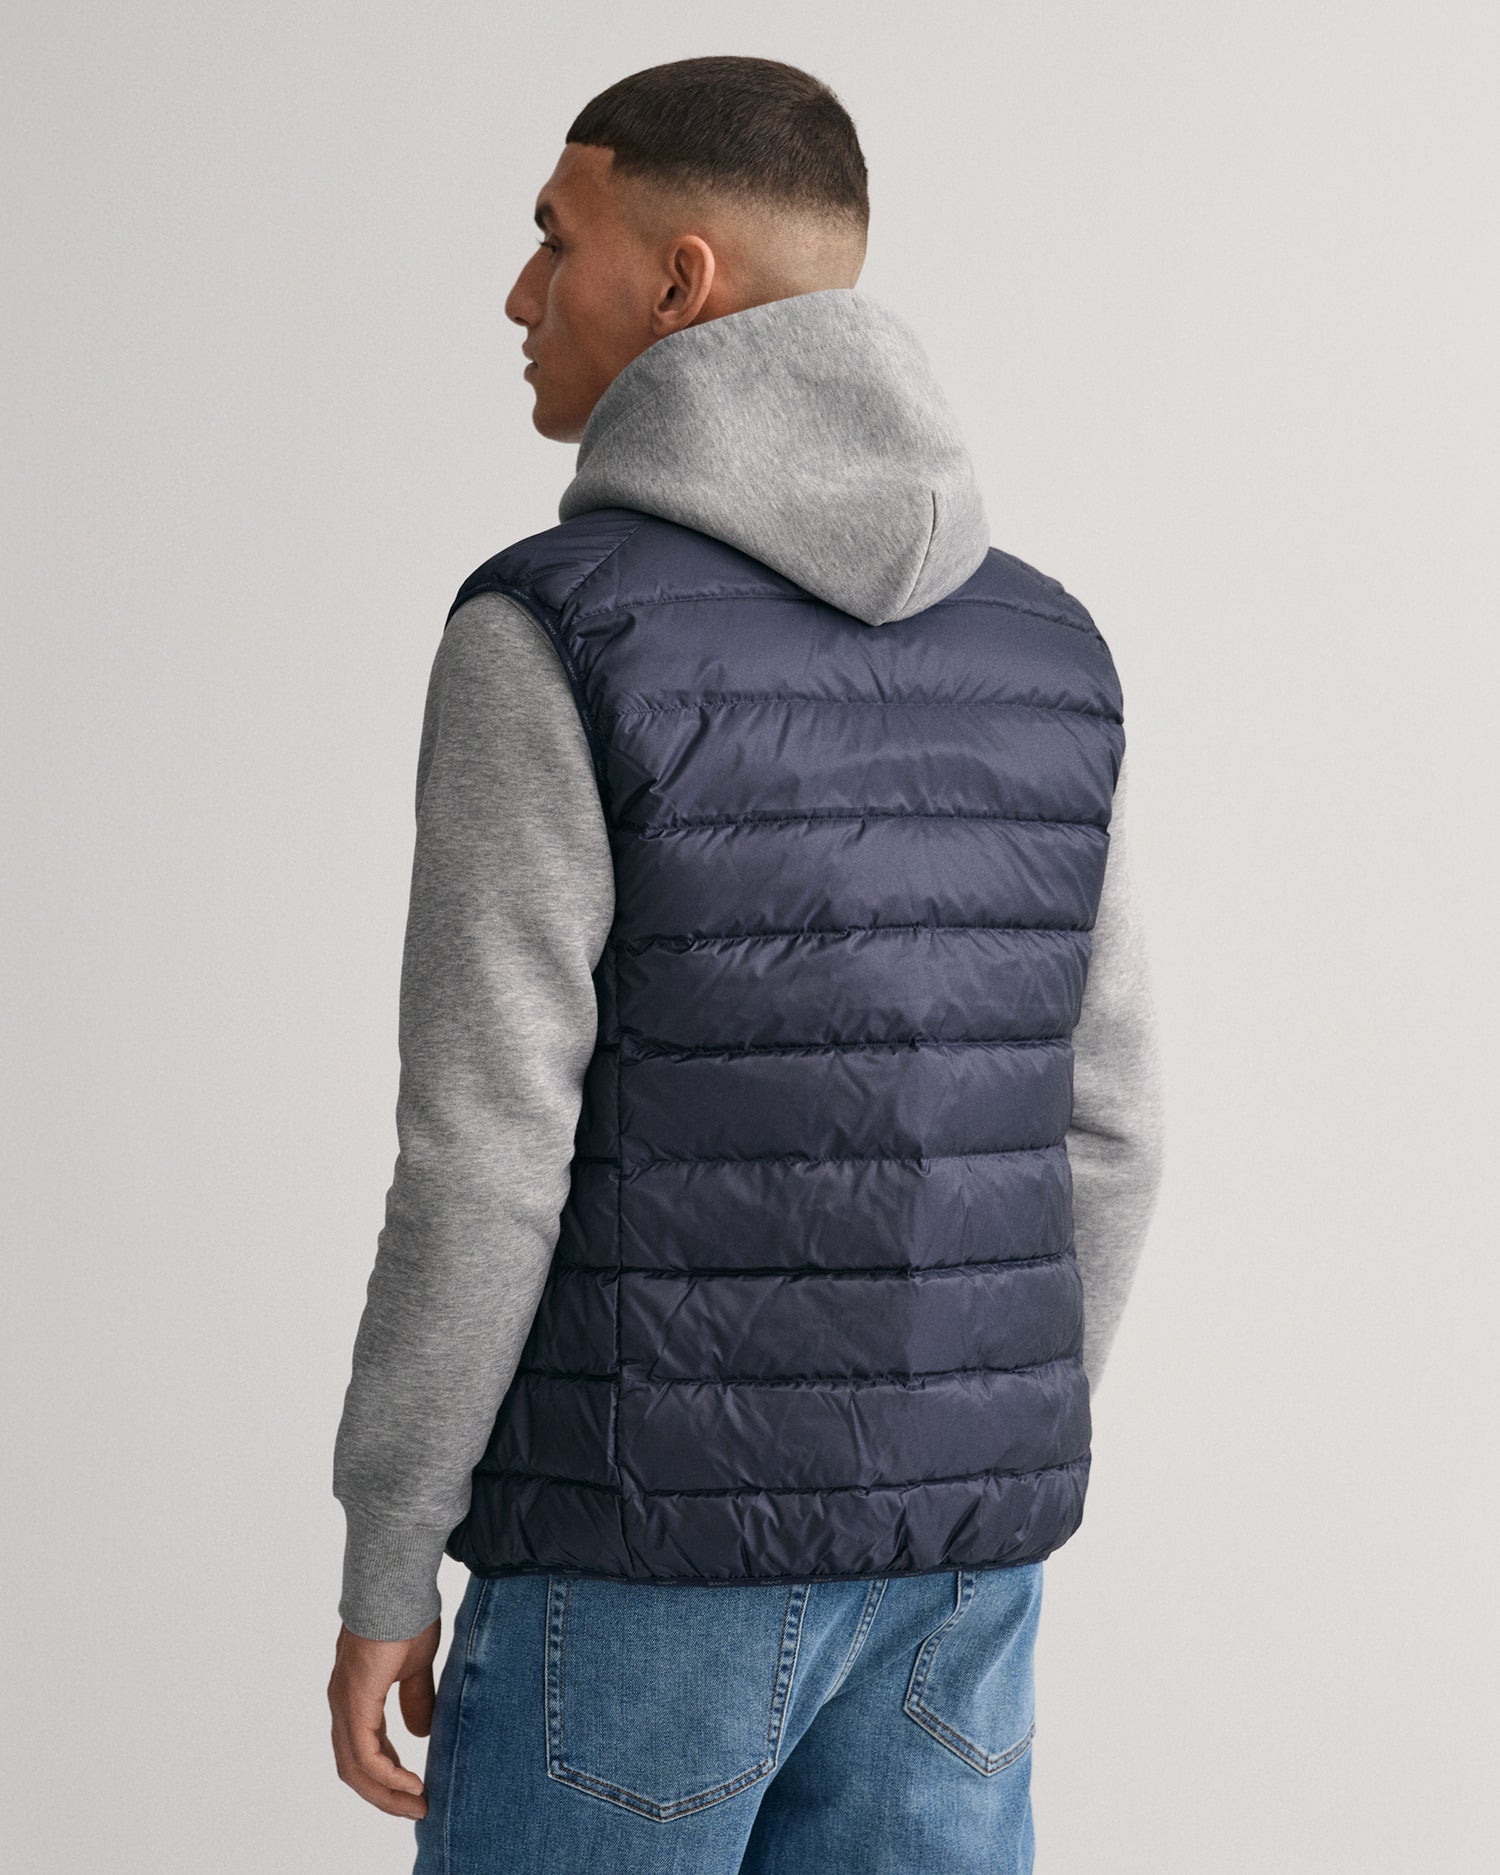 Wantdo | Winter puffer vest, Mens outfits, Sleeveless jacket